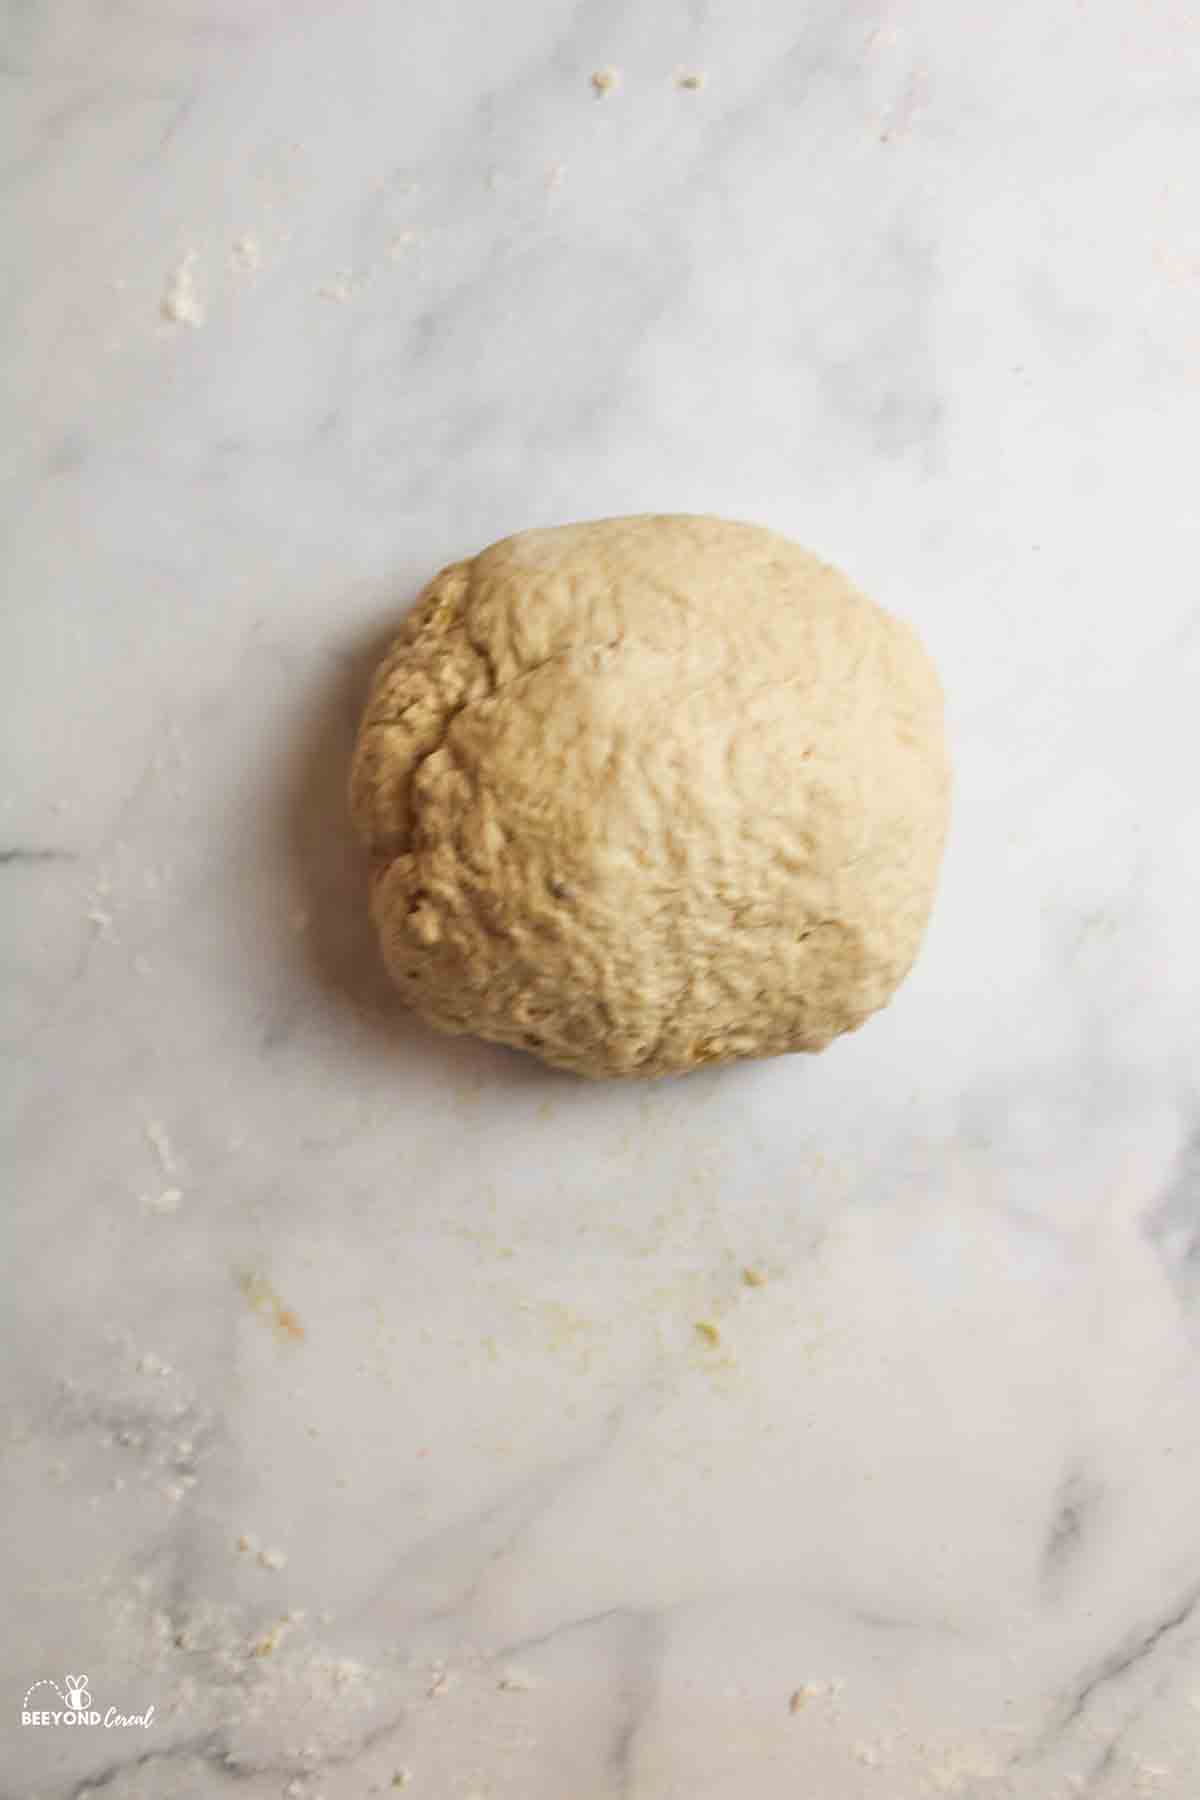 elastic ball of banana bagel dough on a counter.